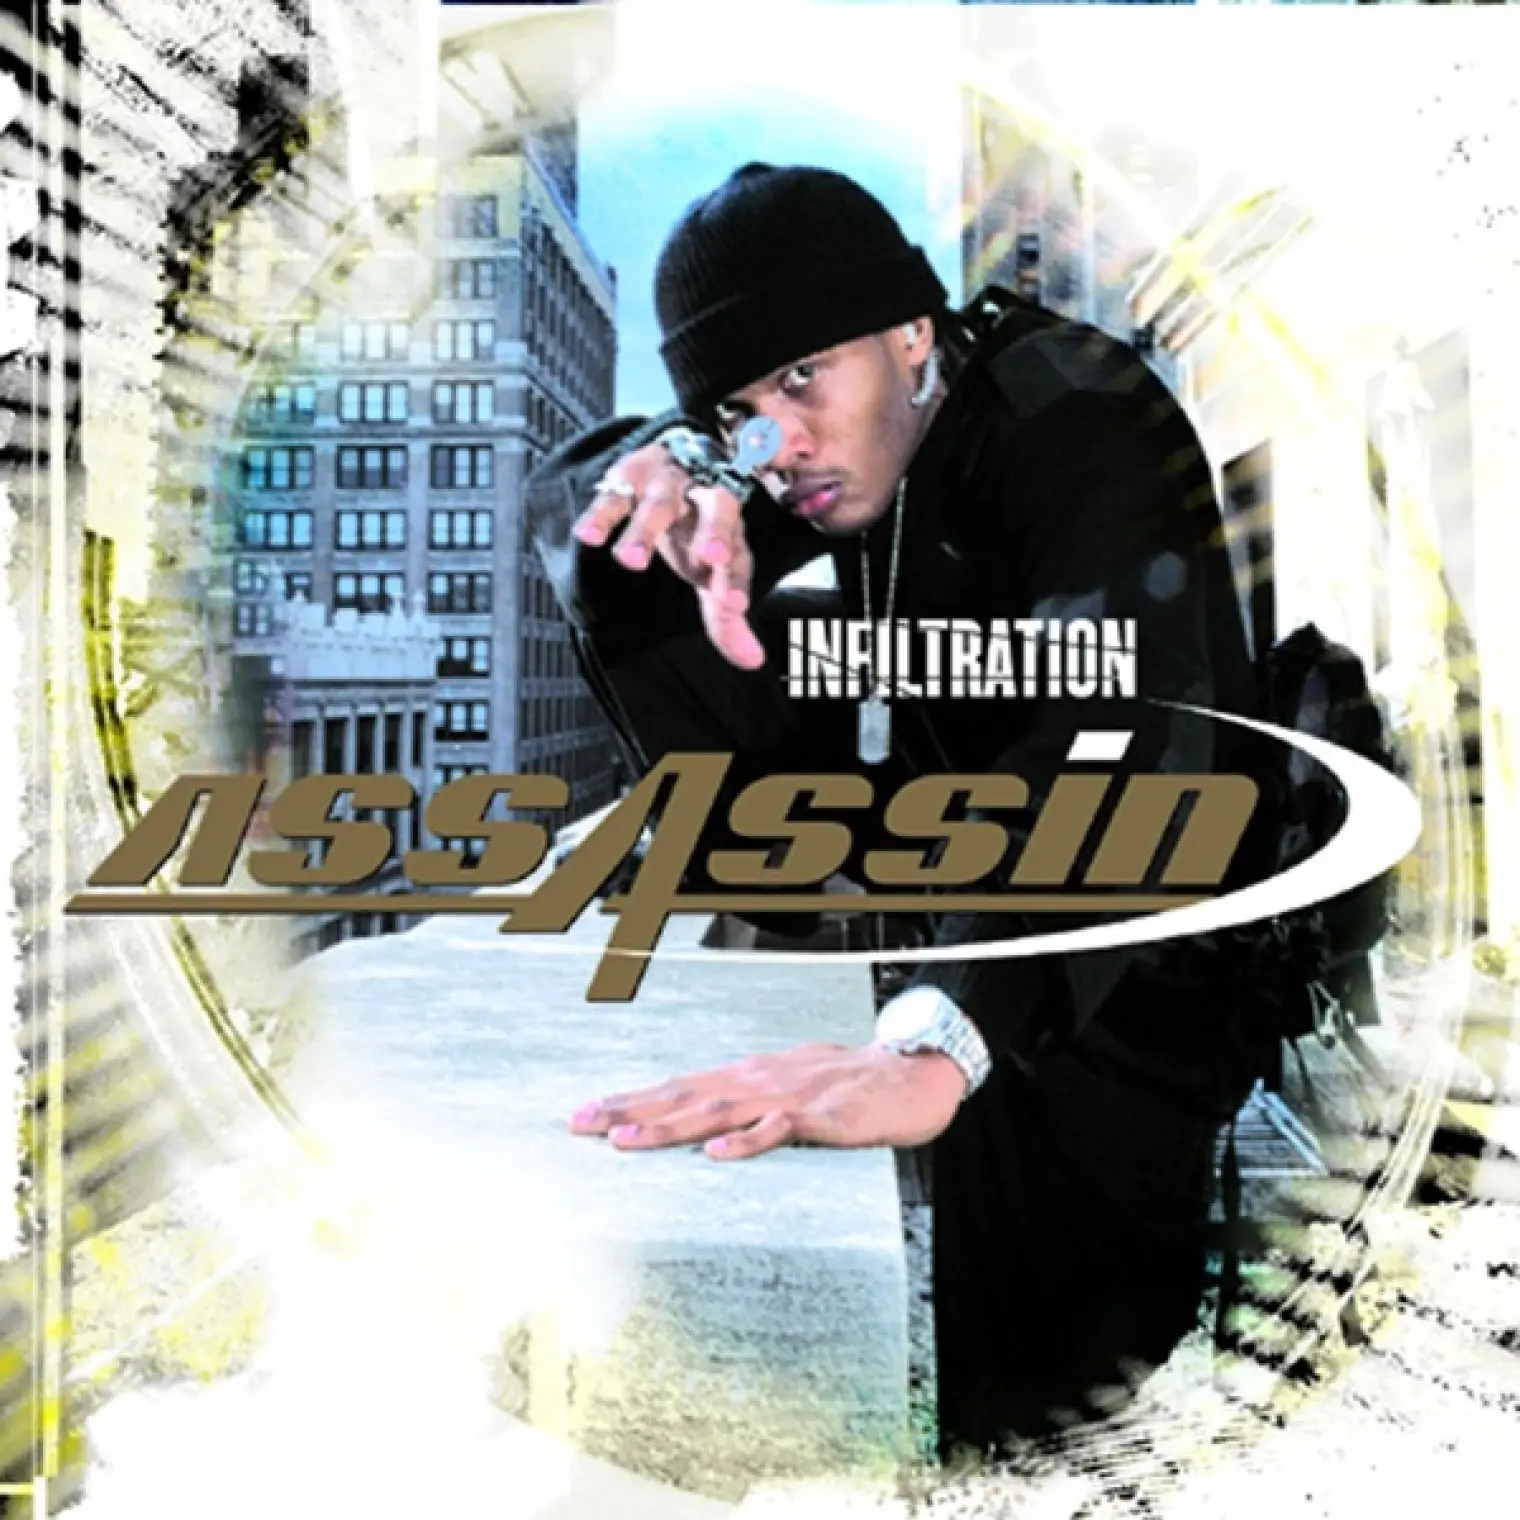 Infiltration -  Assassin 